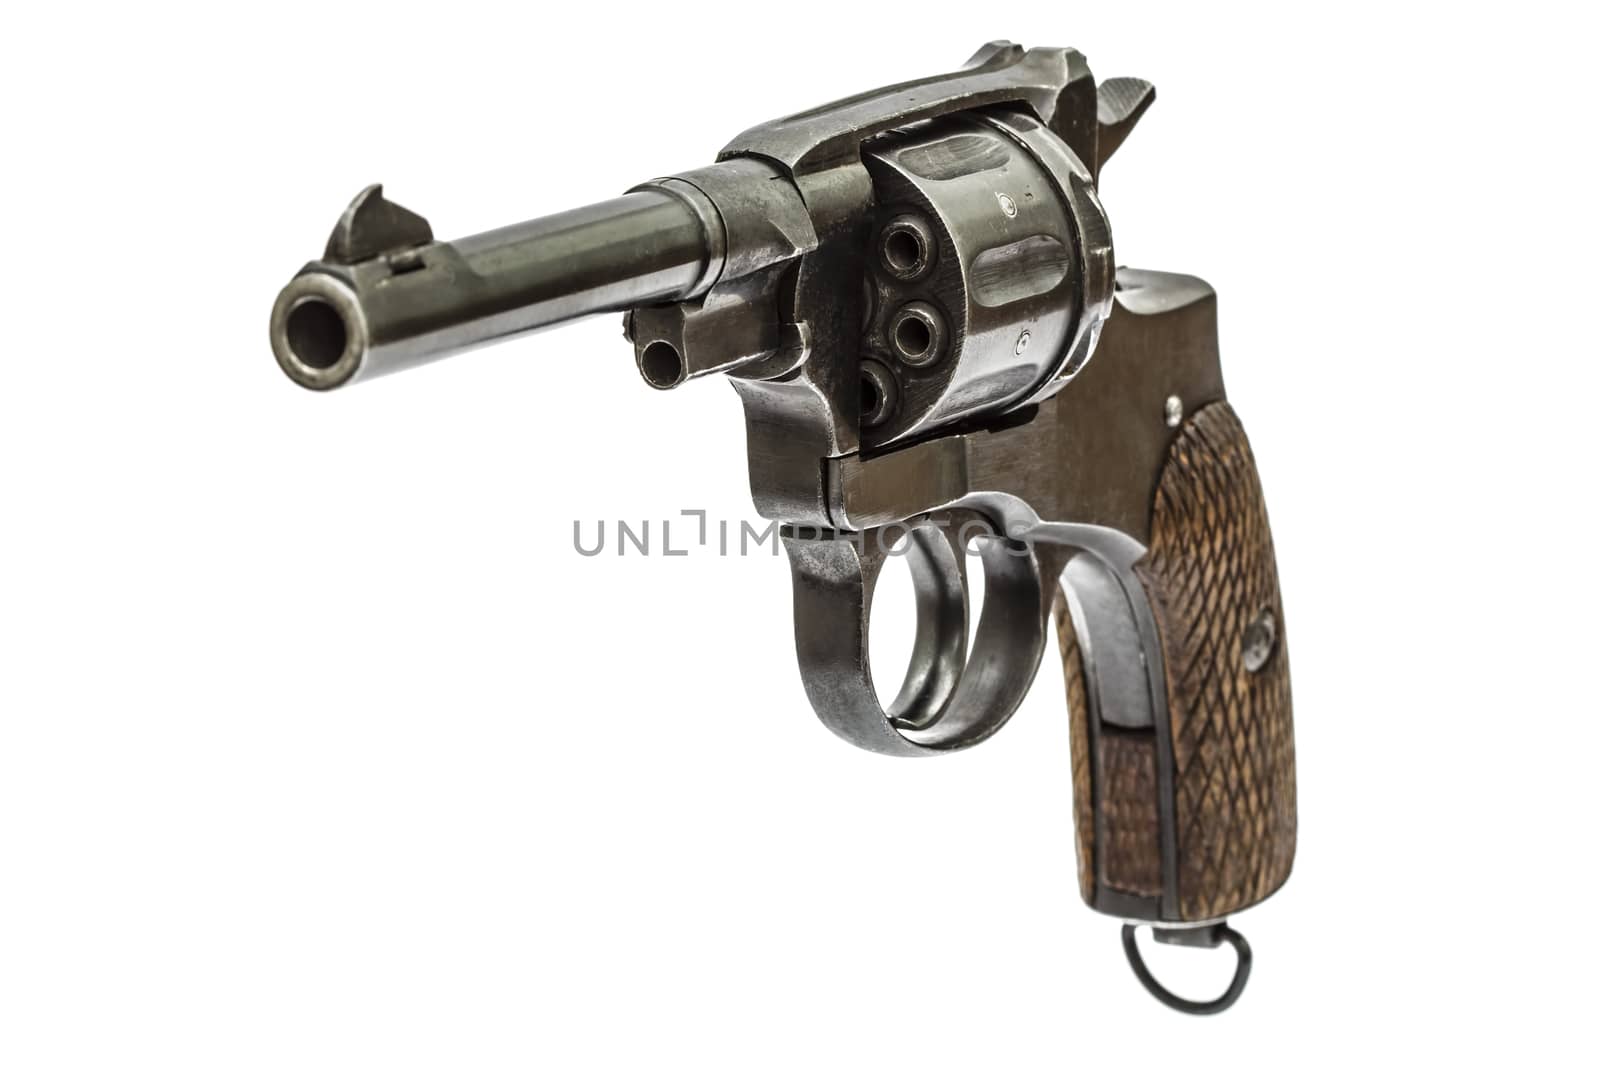 Old pistol, Isolated on white background by kostiuchenko